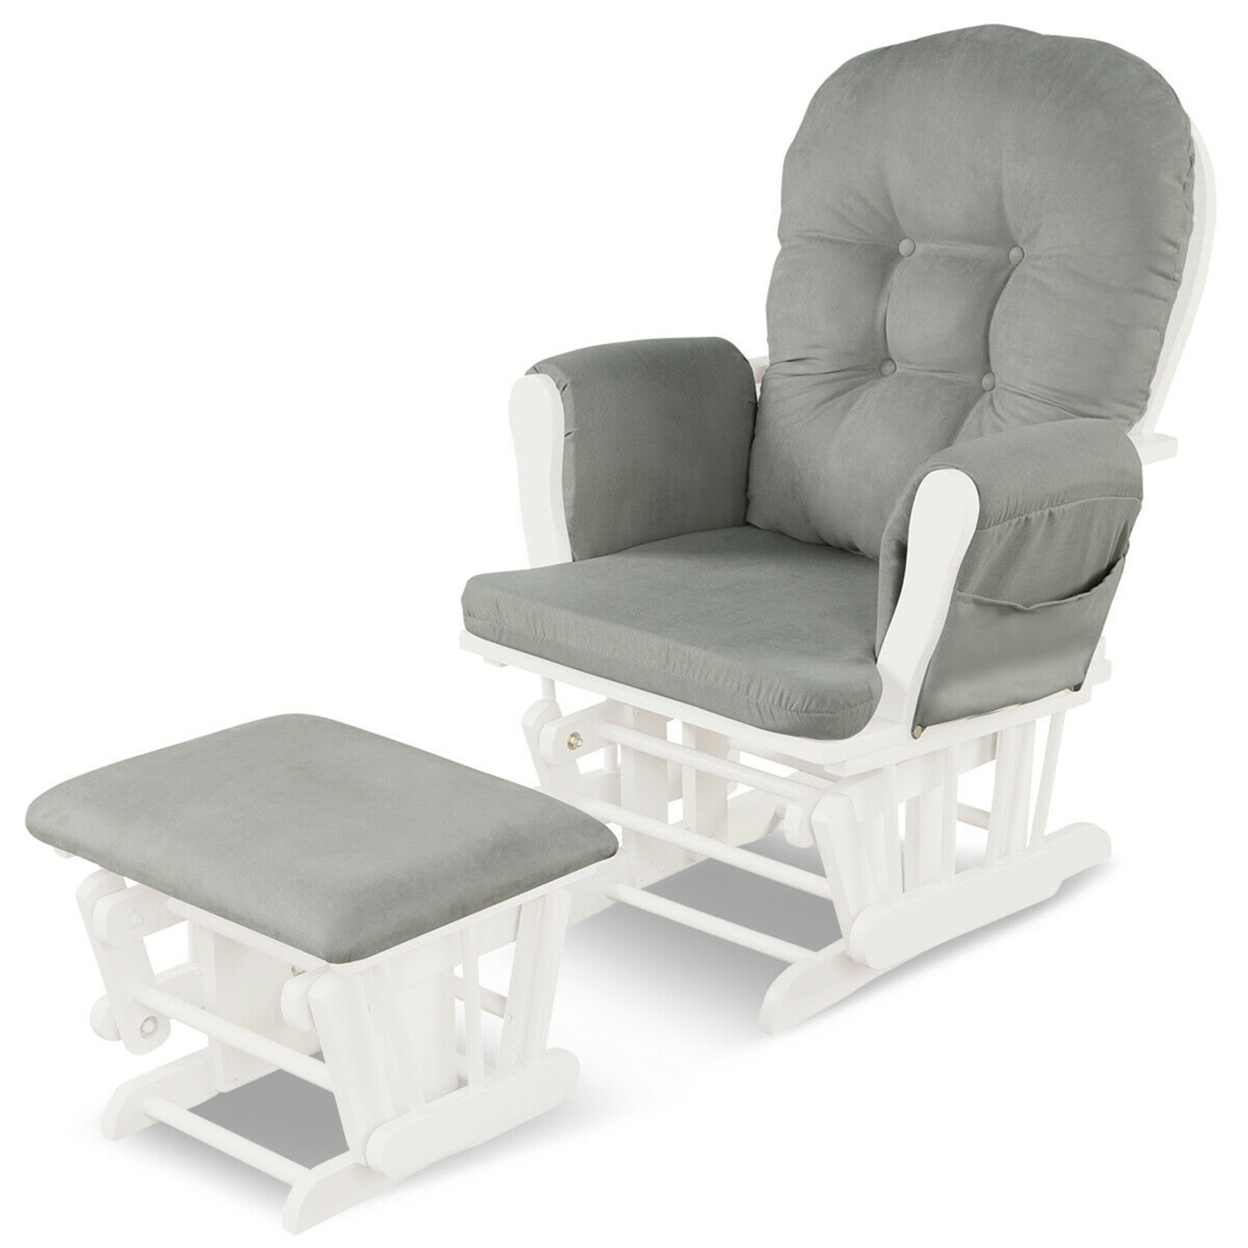 Glider And Ottoman Cushion Set Wood Baby Nursery Rocking Chair - Light Grey